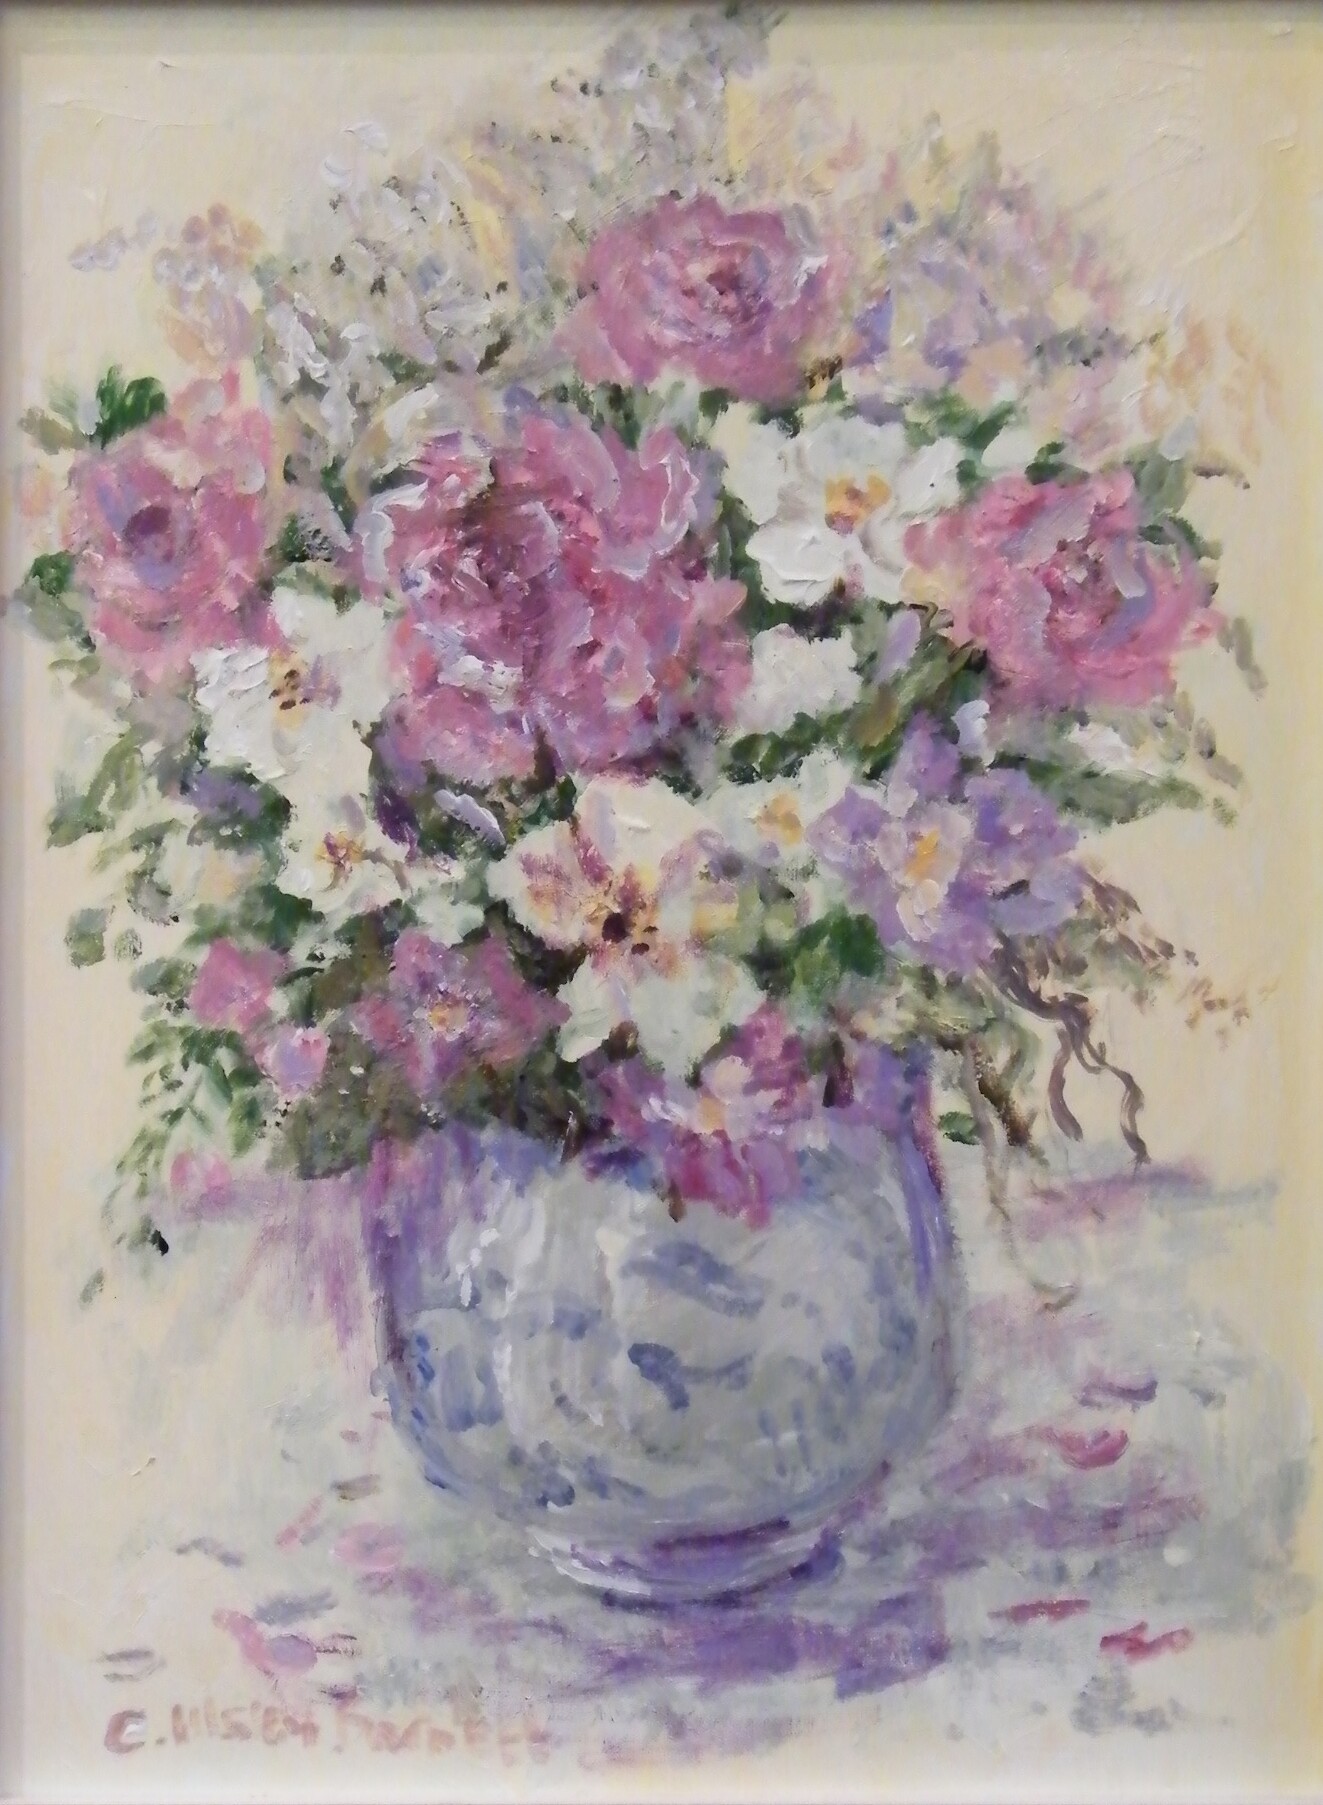 CAROLINE ILLSLEY BARNETT
Still life of flowers.
Acrylic on canvas.
Signed.
60 x 44.5cm.